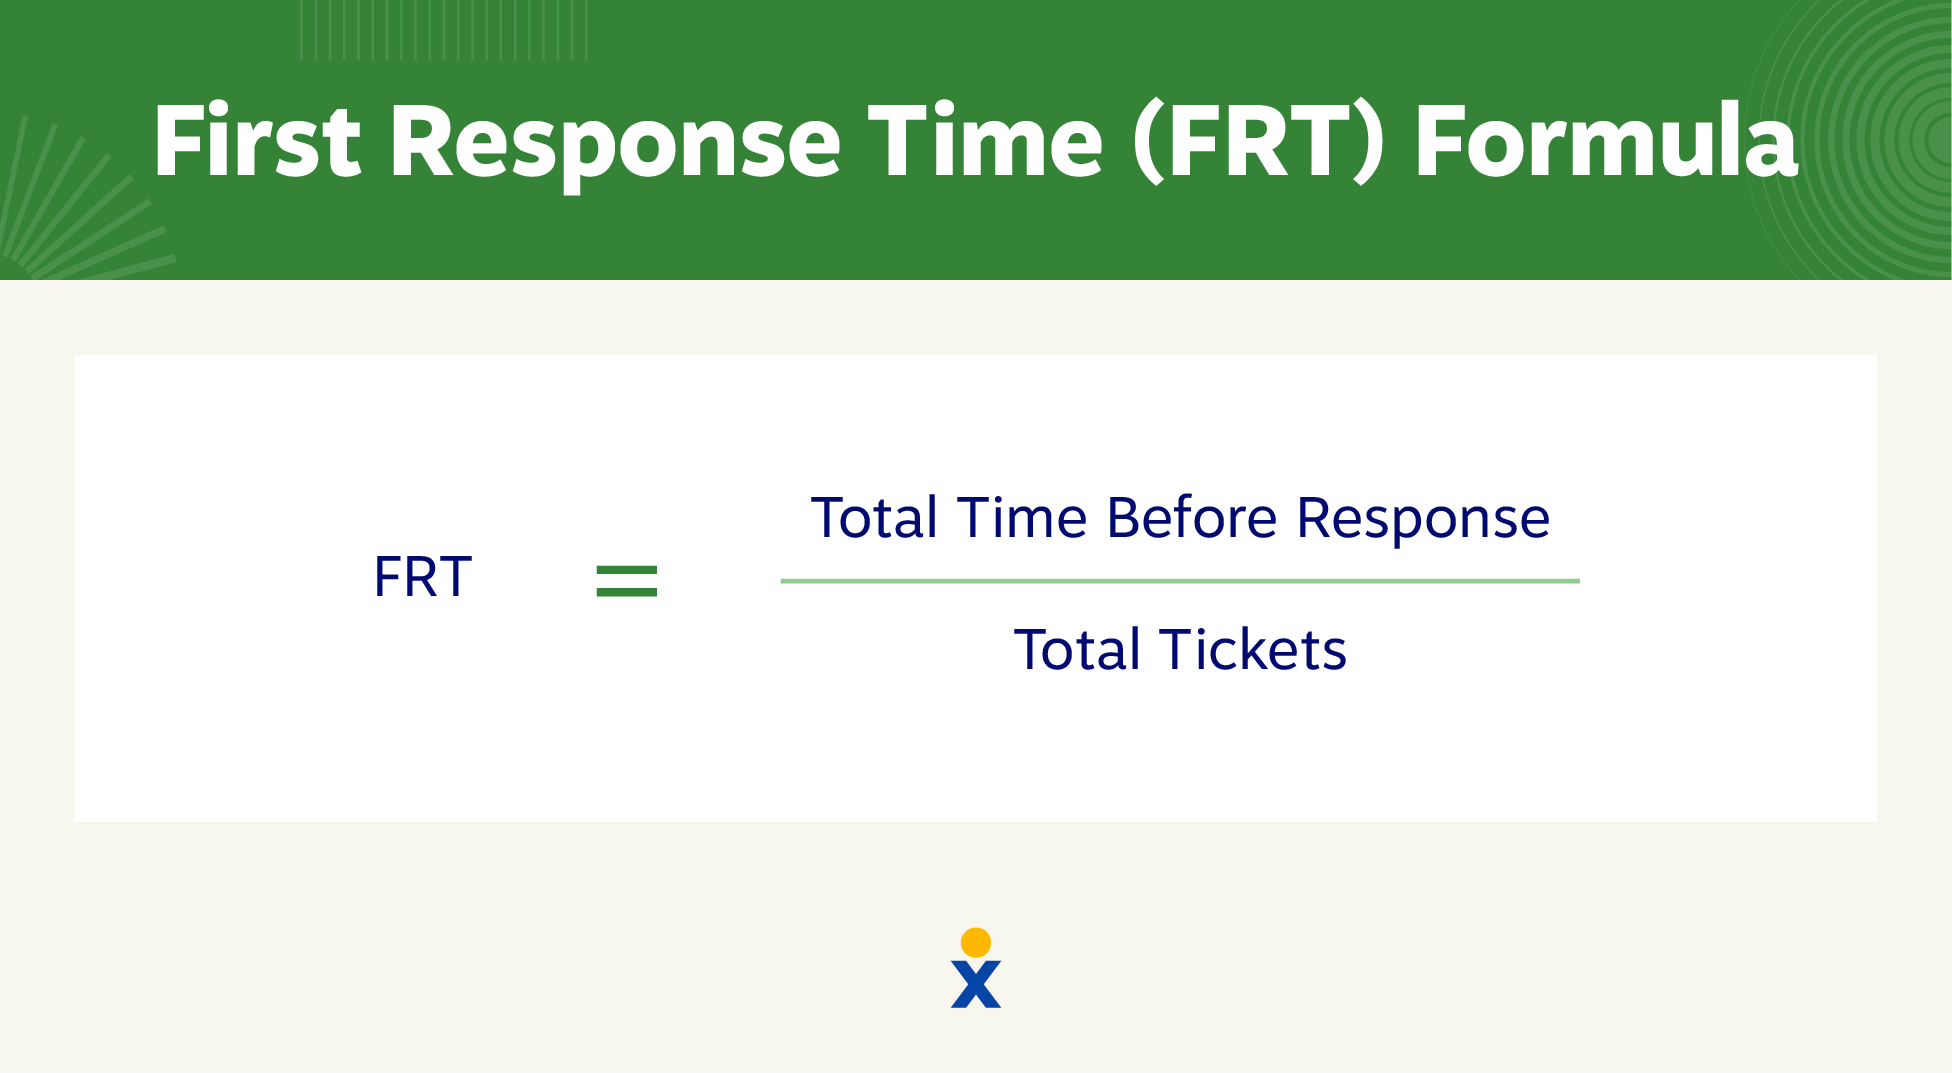 First Response Time (FRT) formula